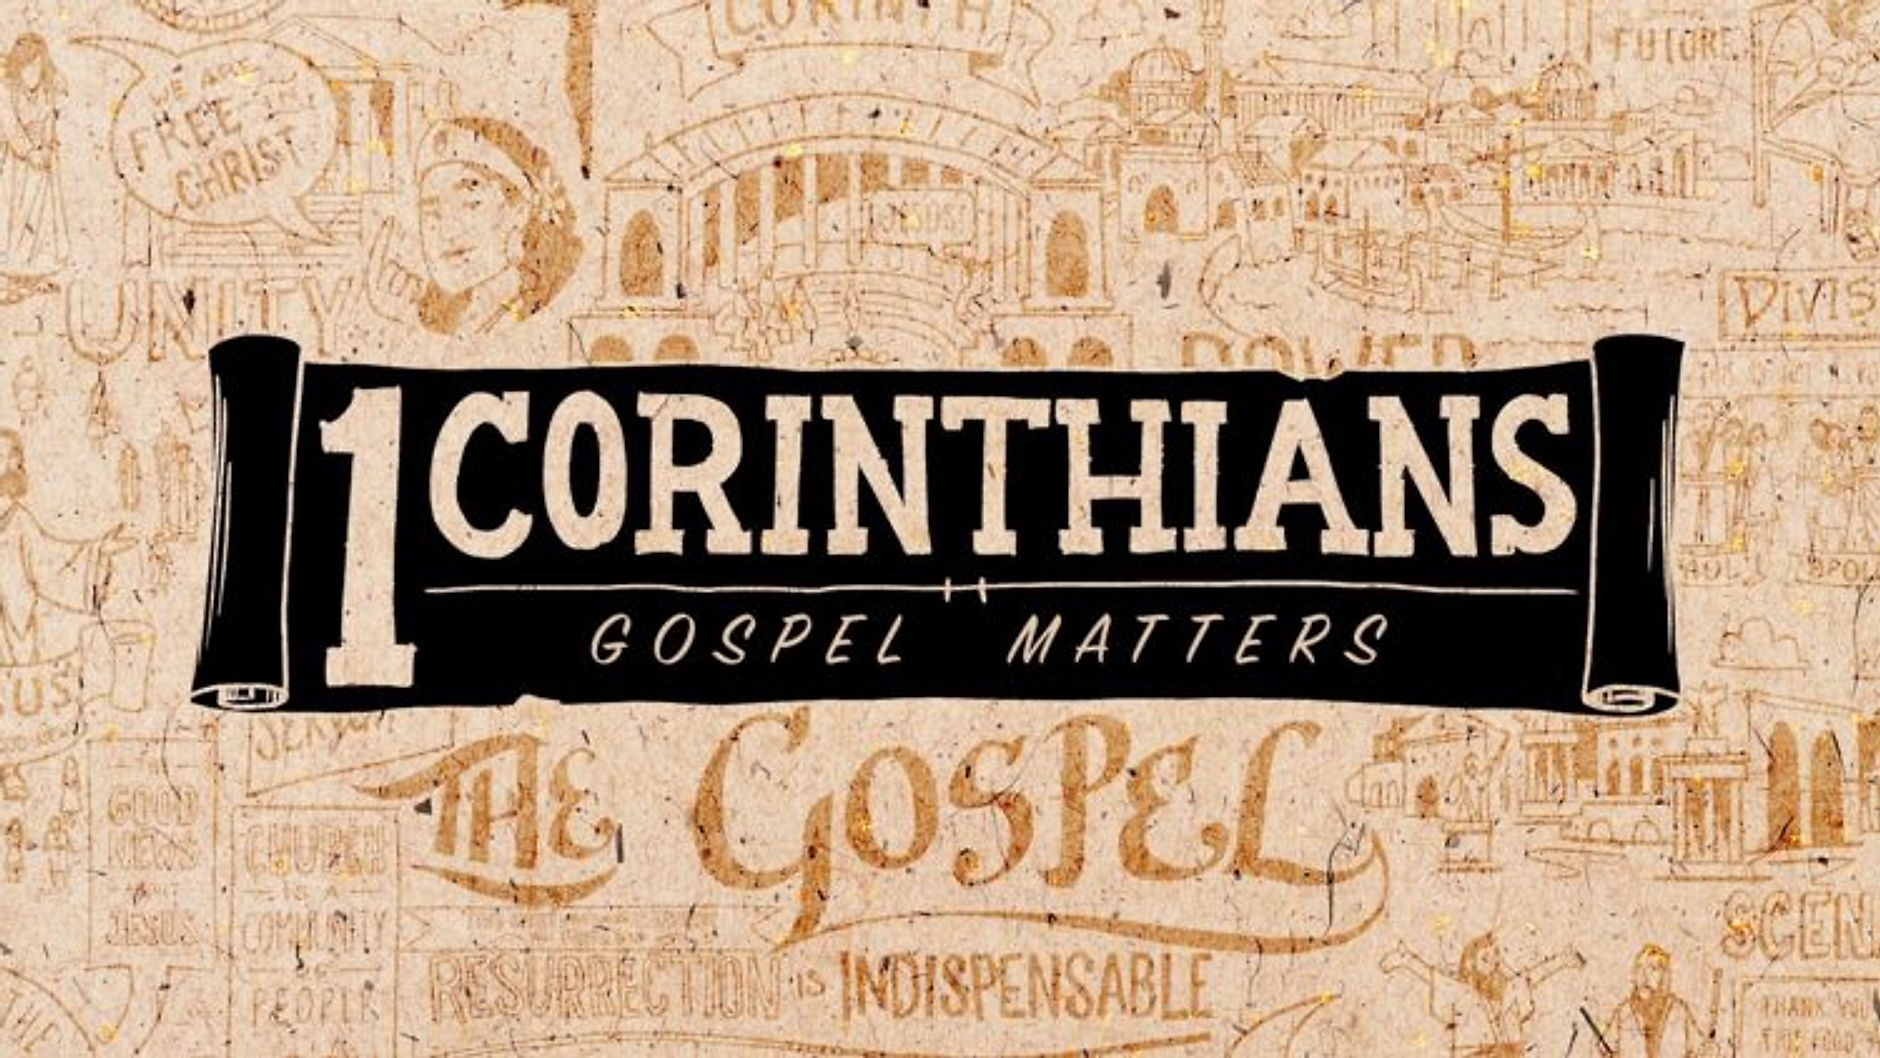 1 Corinthians: Gospel Matters